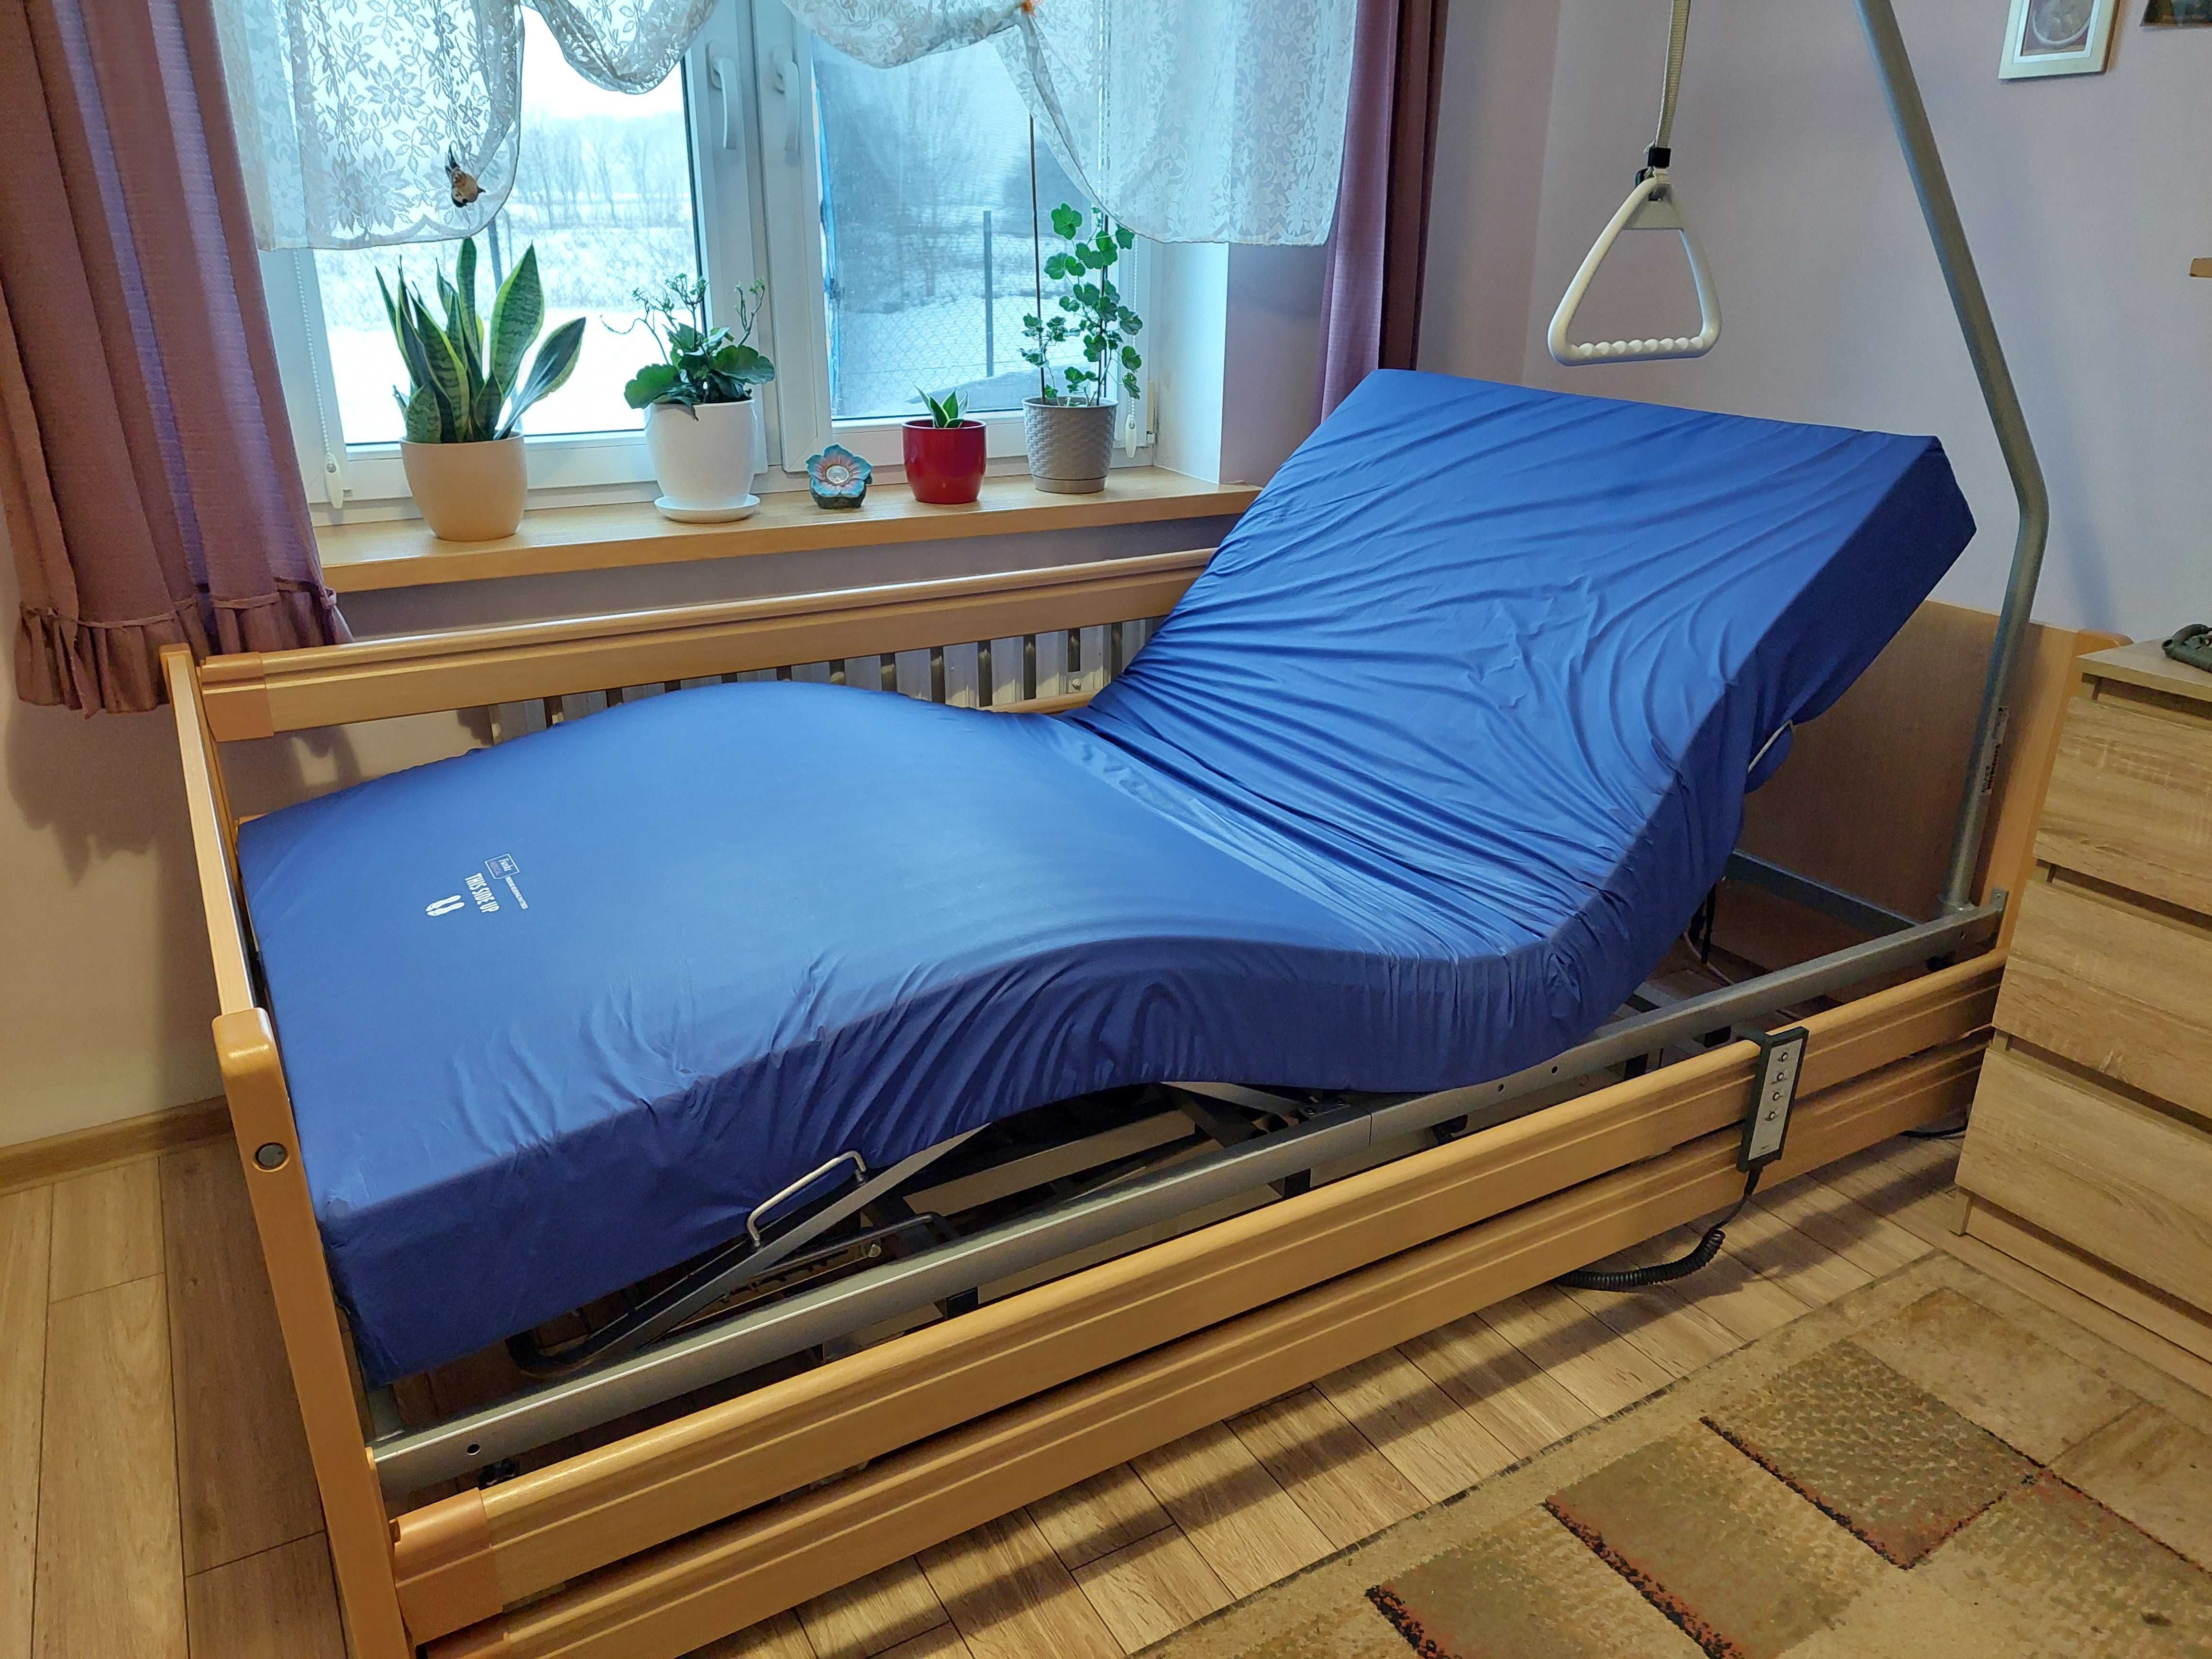 Łóżko rehabilitacyjne Elbur PB 526 II 100x200cm